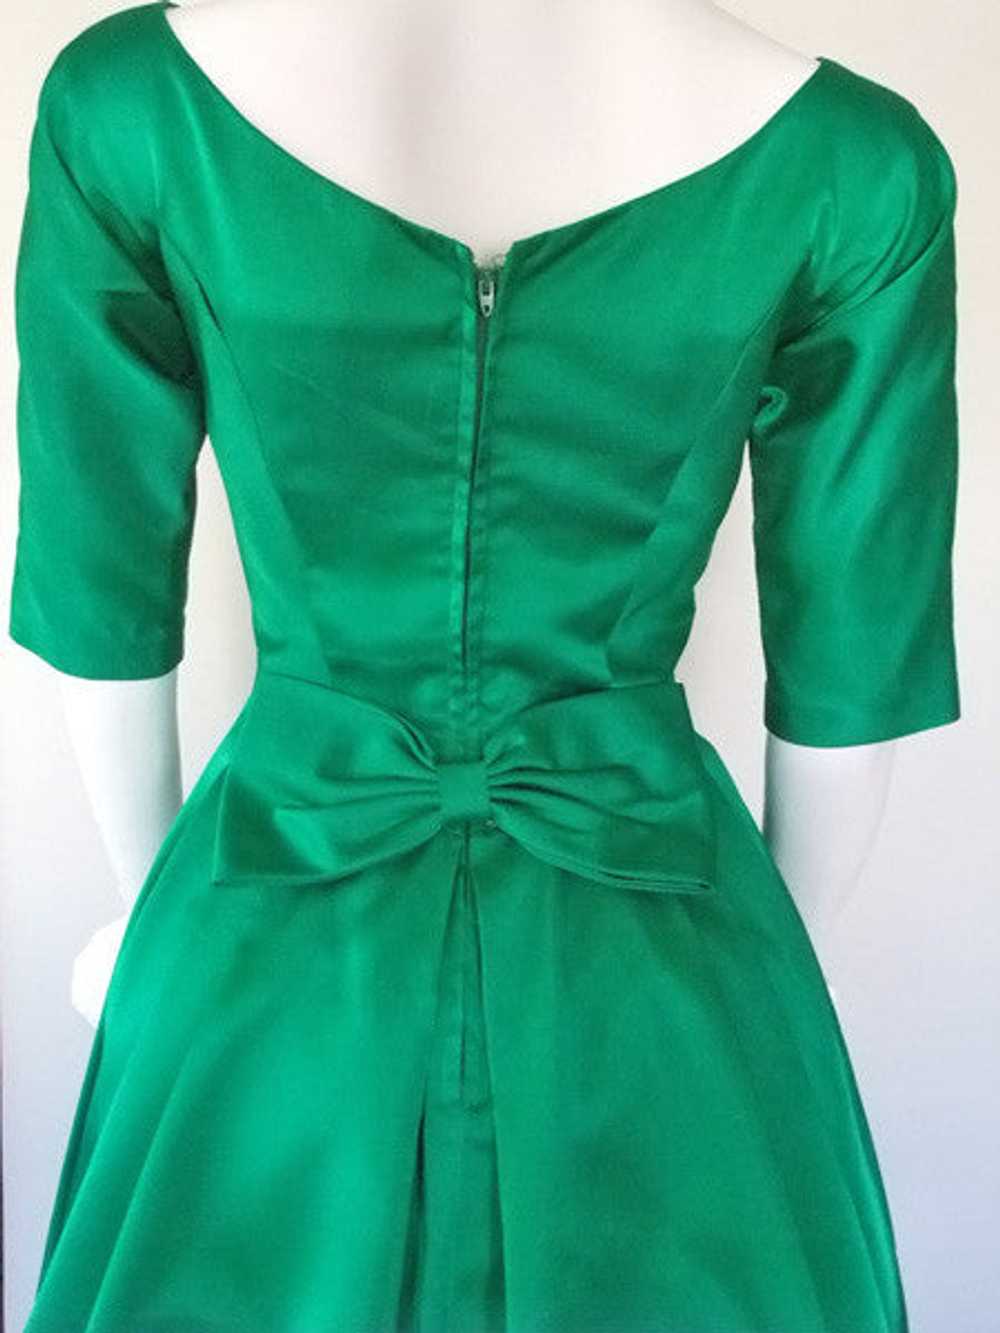 1960s Emerald Green Satin Dress - image 7